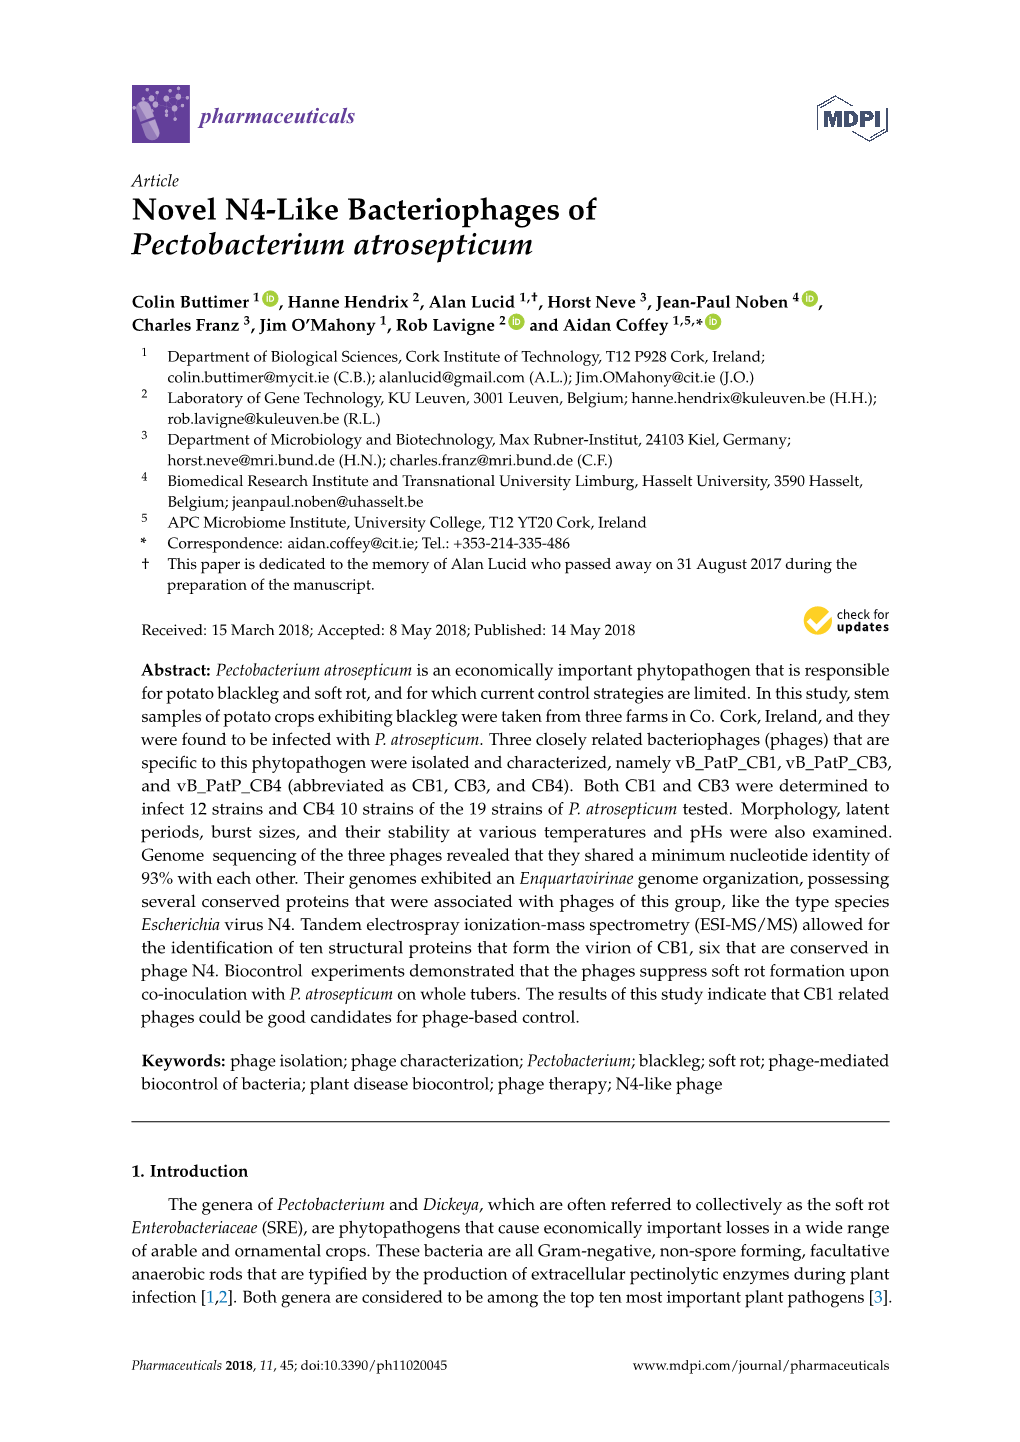 Novel N4-Like Bacteriophages of Pectobacterium Atrosepticum